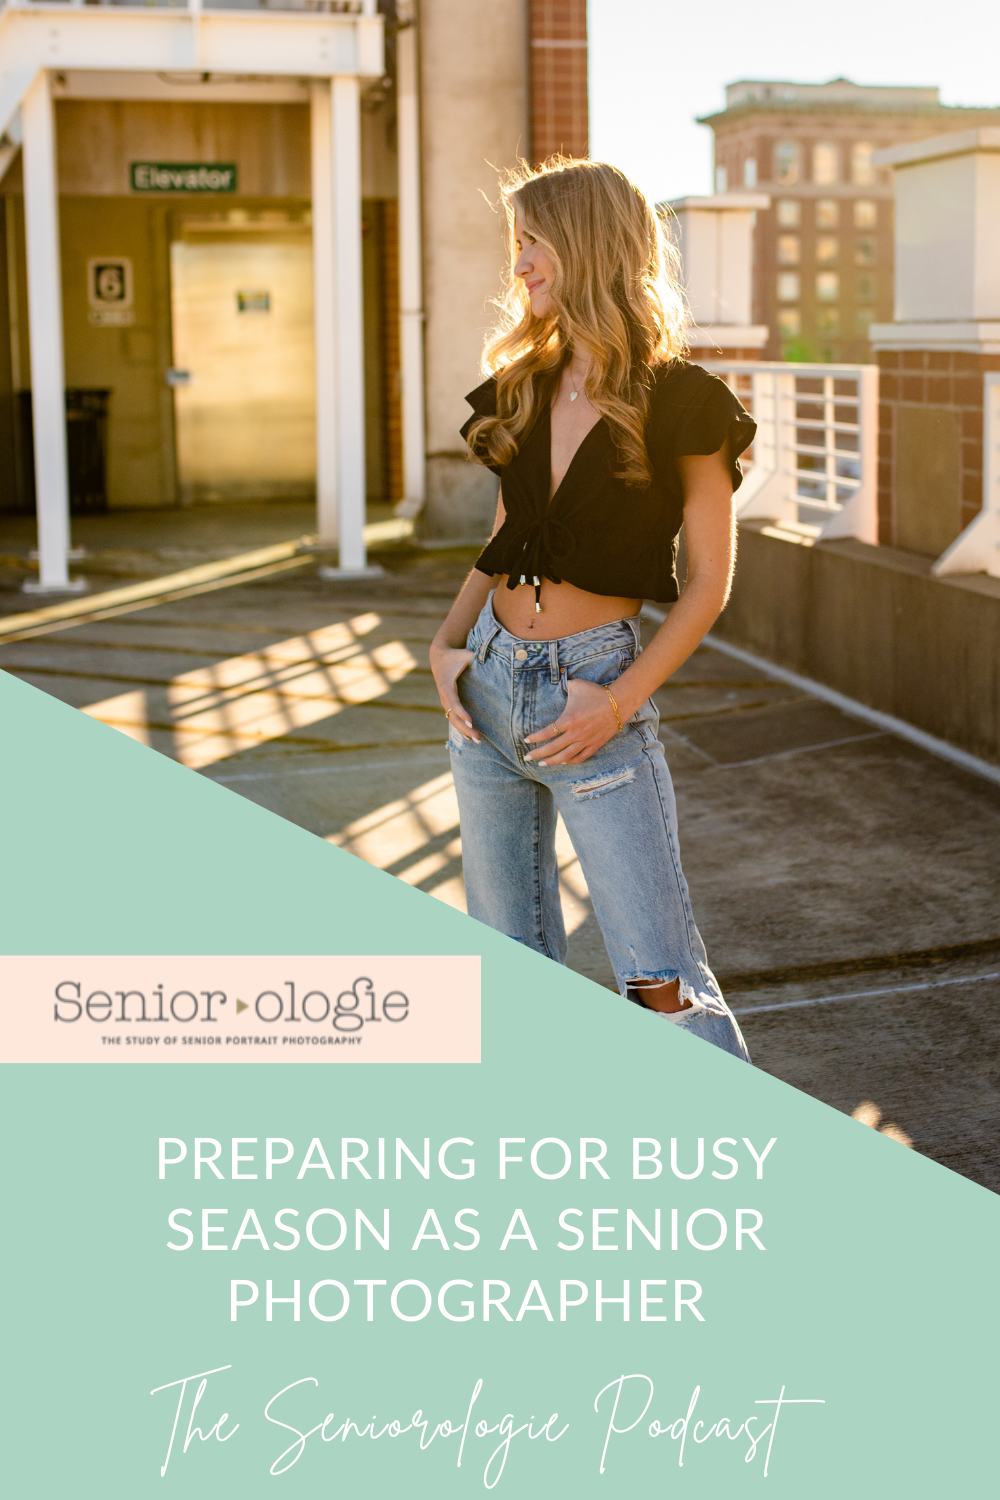 Preparing for Busy Season as a Senior Portrait Photographer: tips to make busy season a breeze by planning for photographers, Seniorologie Podcast ep. 71